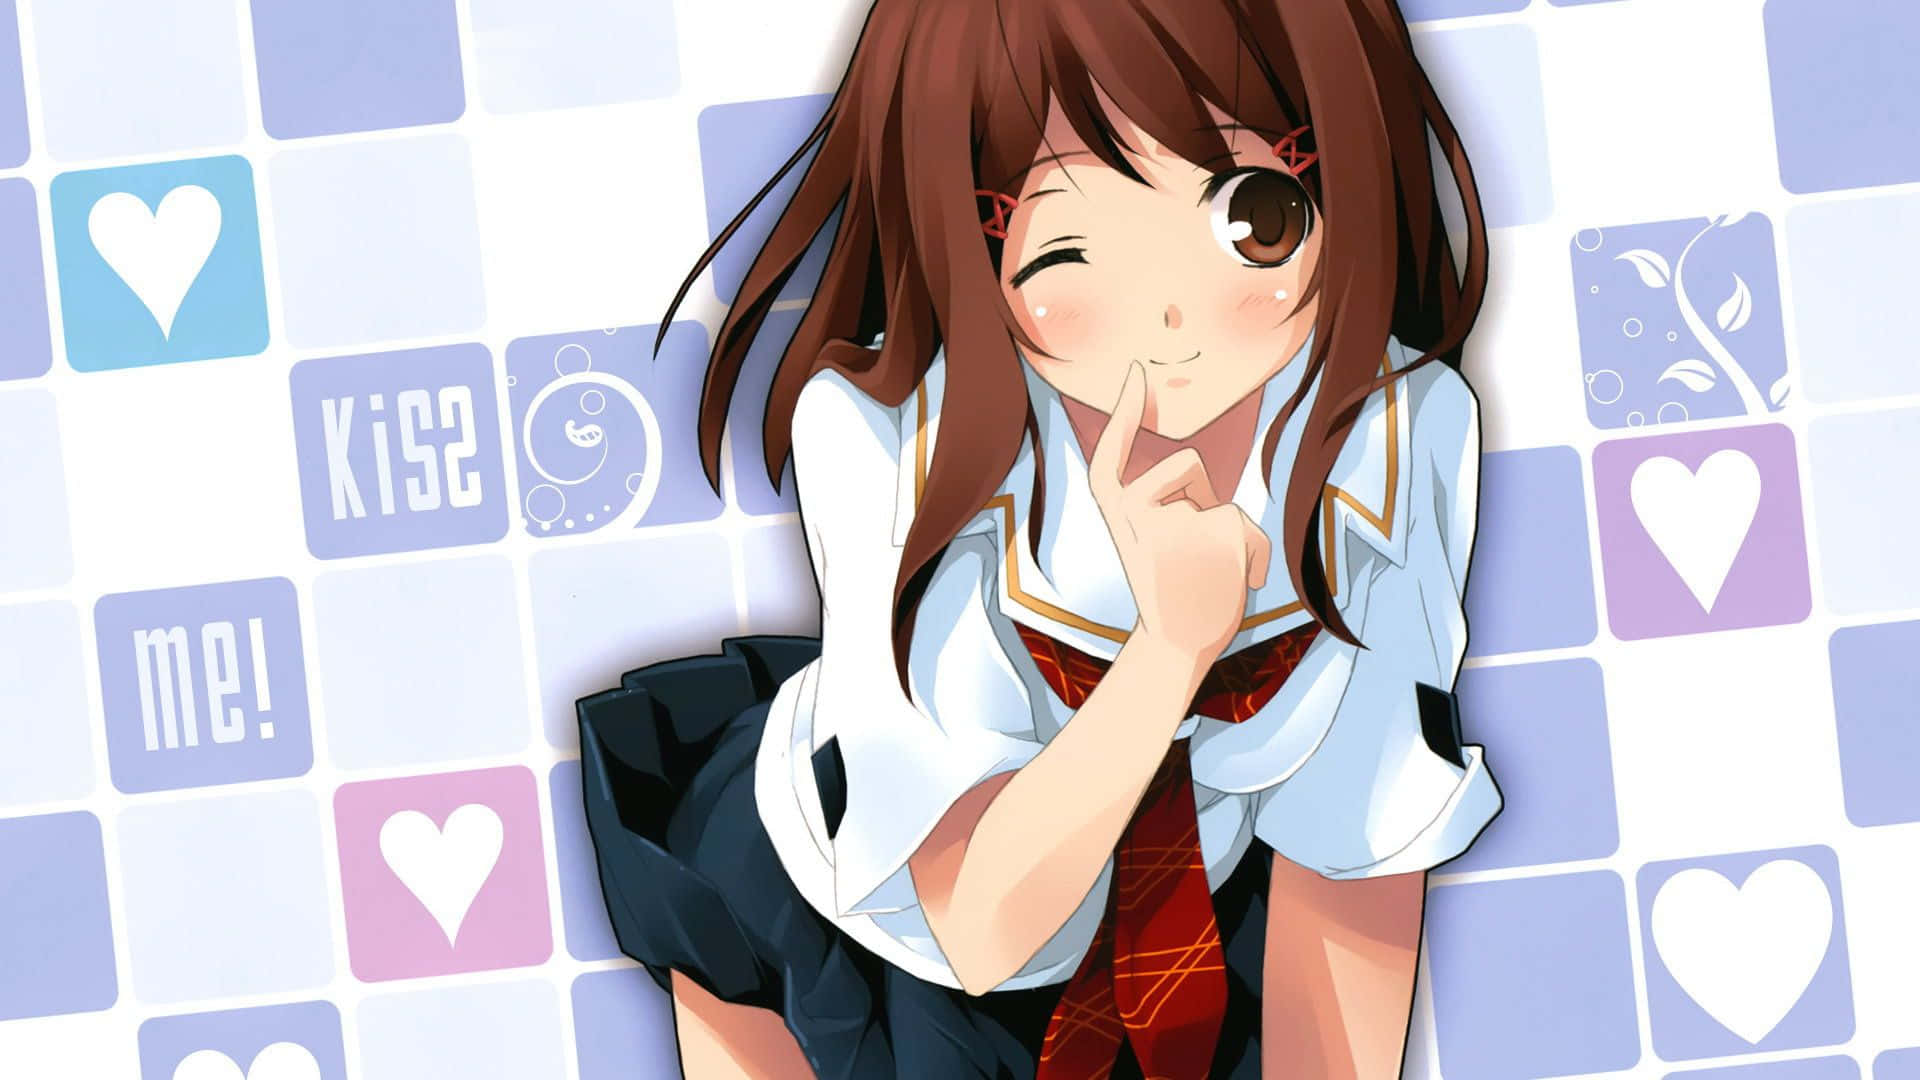 Girly Cute Winking Anime Wallpaper